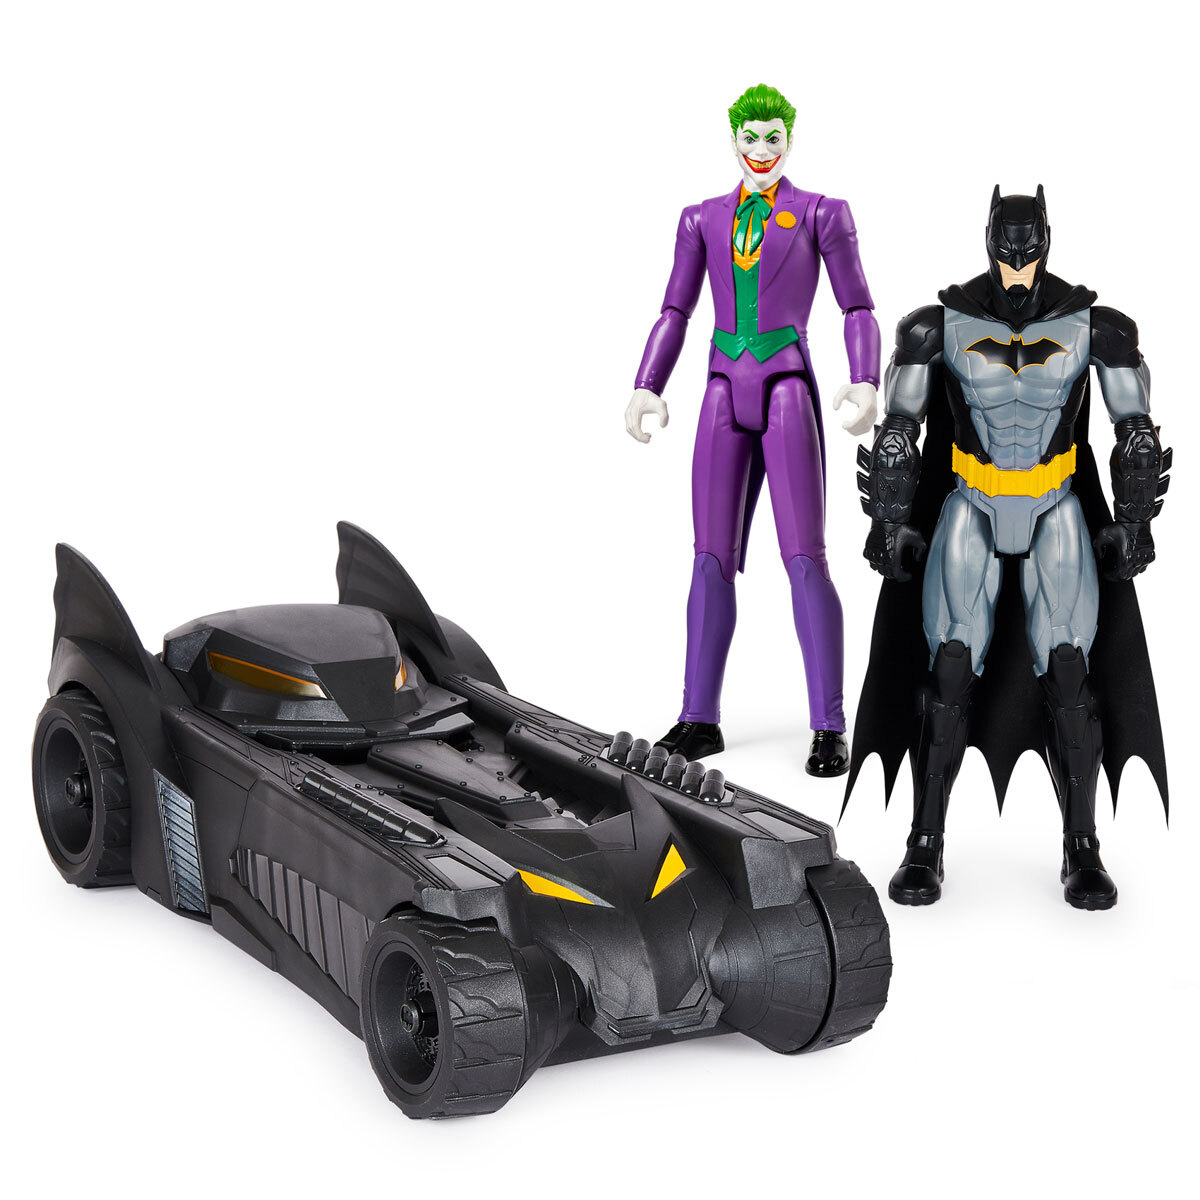 Batman, Harley and Batmobile image on white background